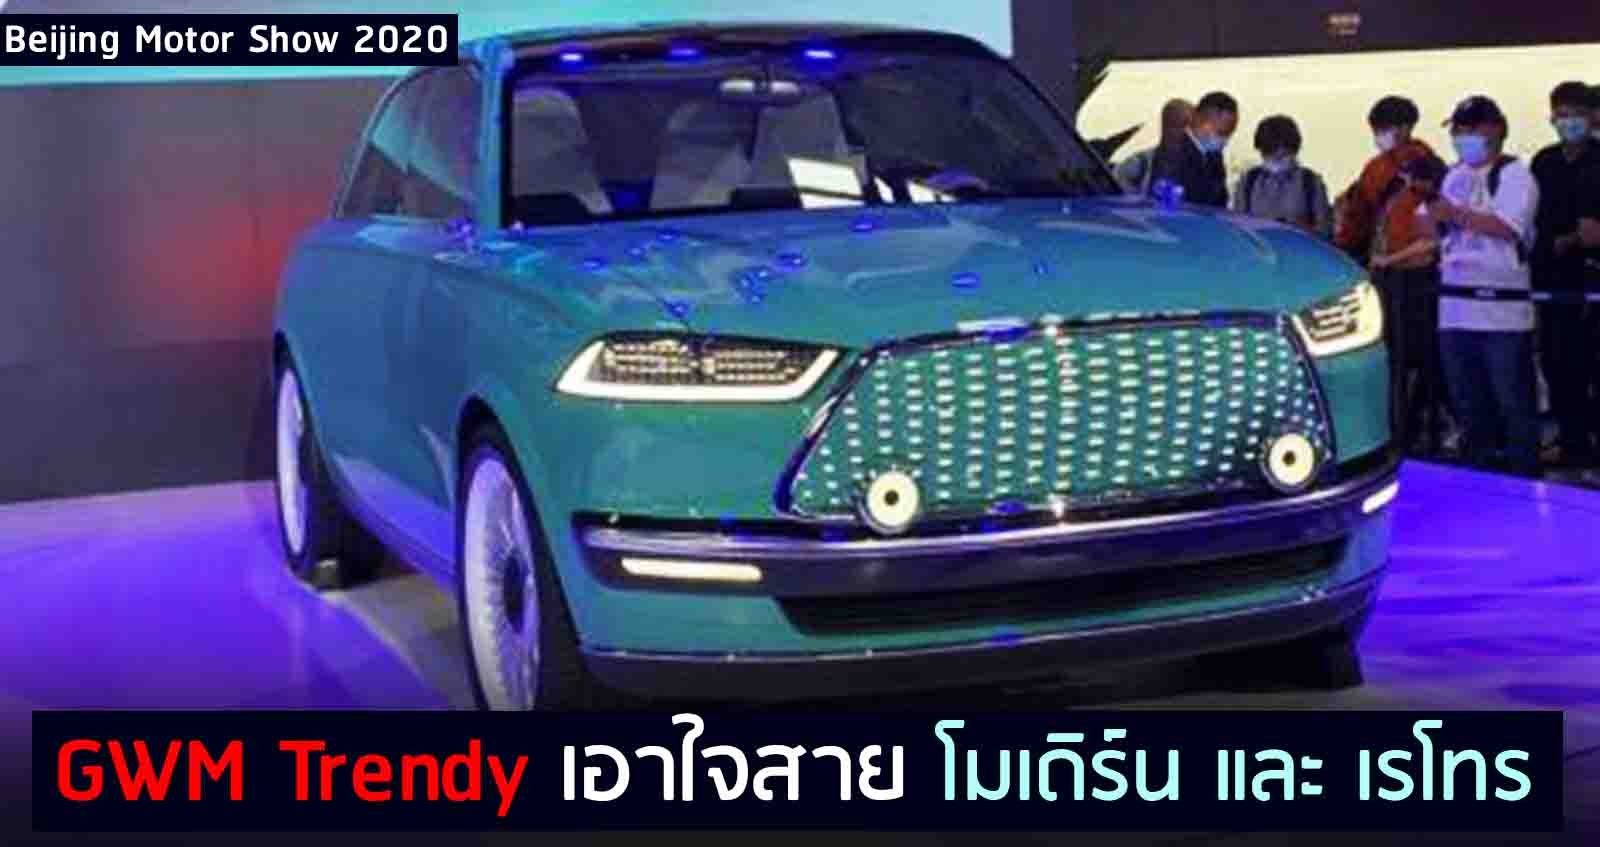 GWM Trendy เอาใจสาย โมเดิร์น และ เรโทร ในงาน Beijing Auto Show 2020